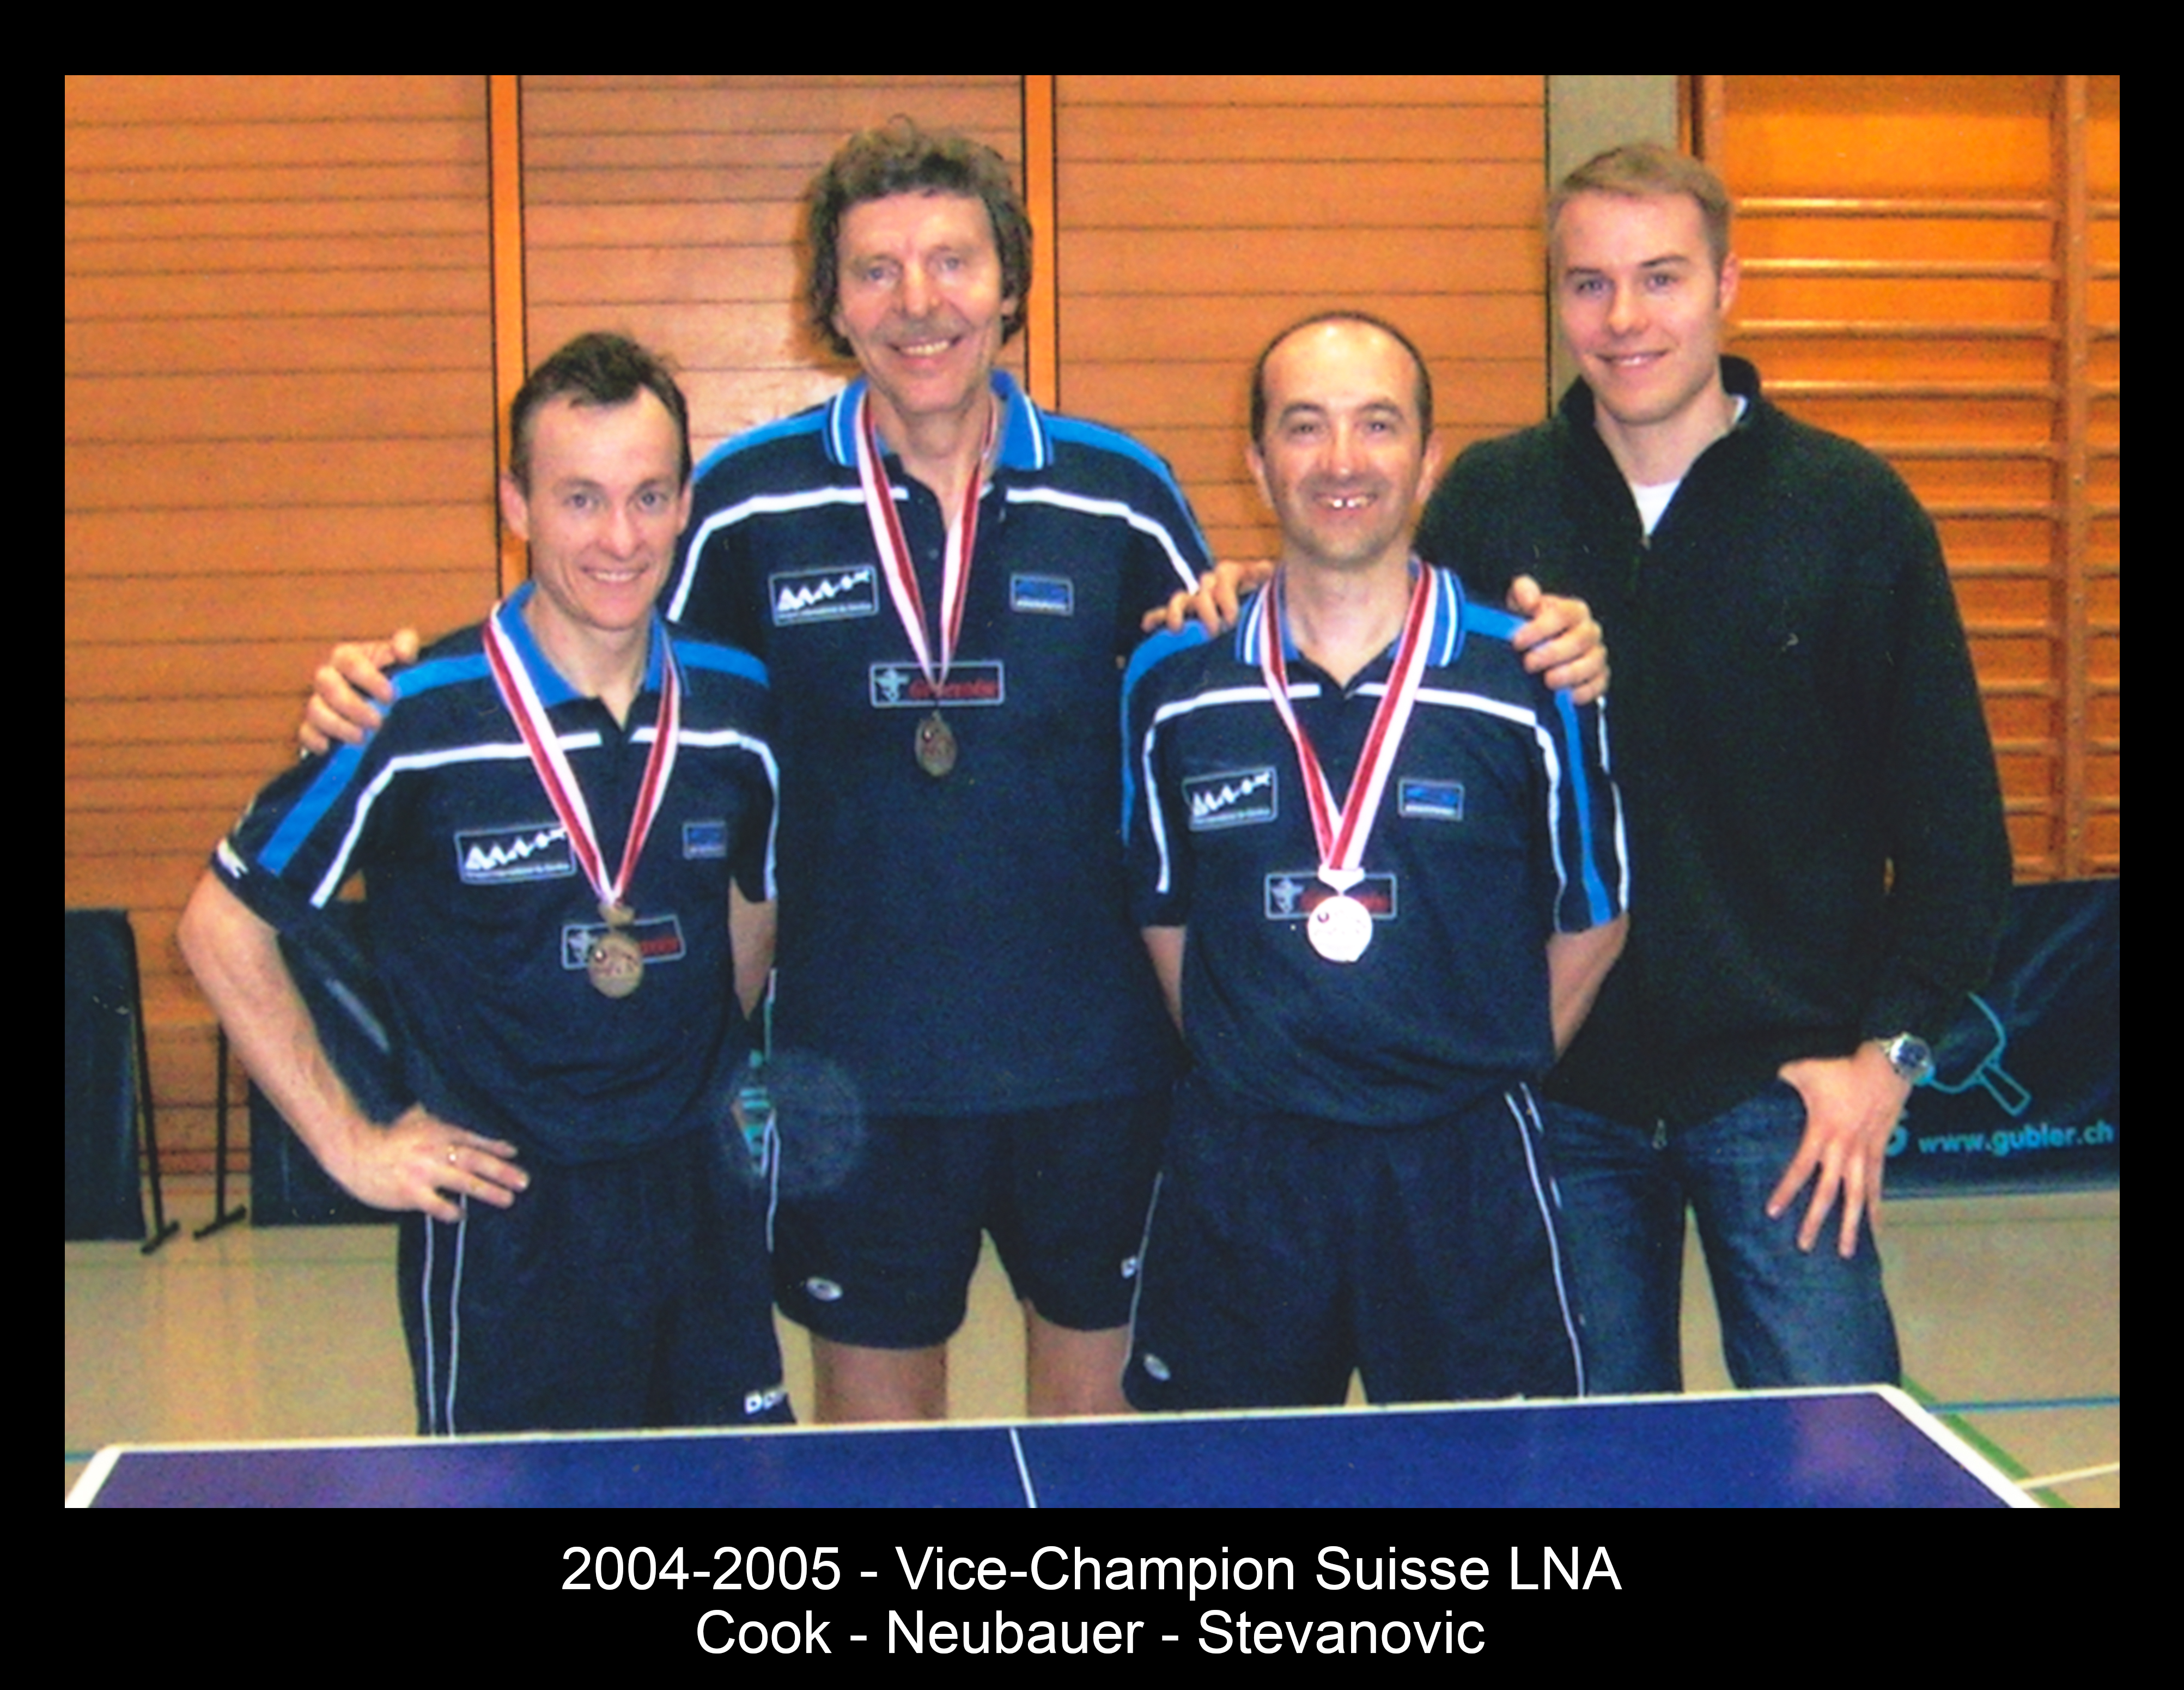 2004-2005 - Vice-Champion Suisse LNA - Cook - Neubauer - Stevanovic